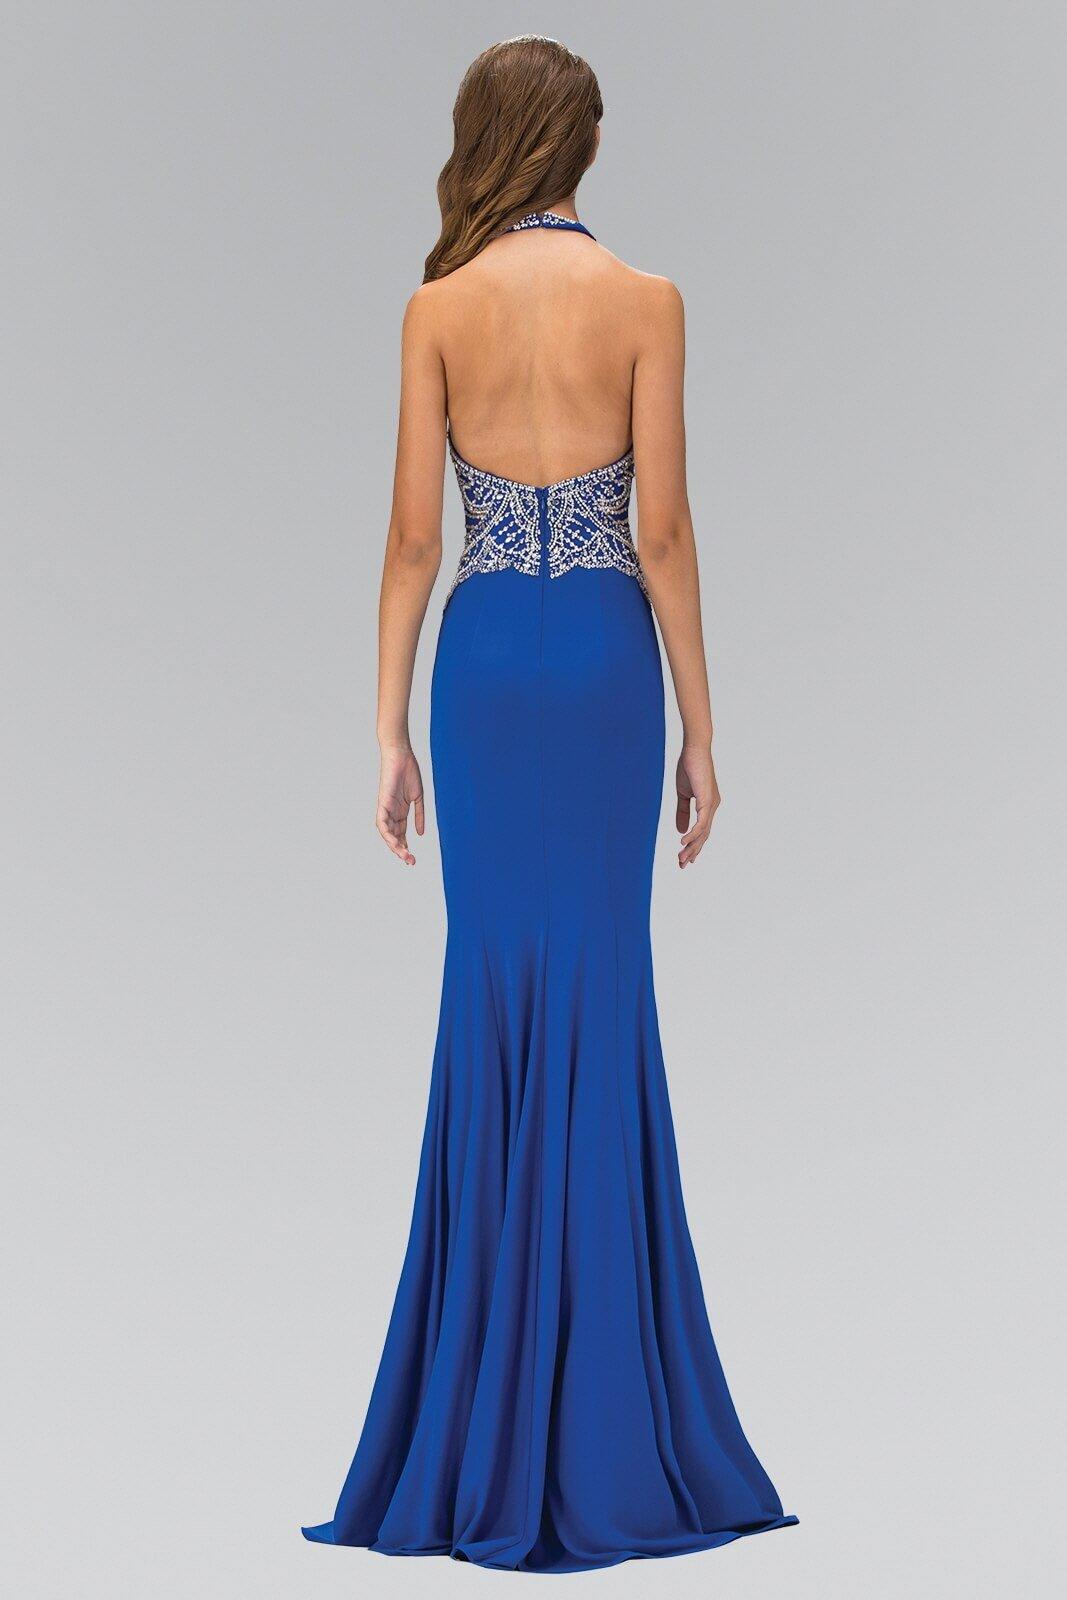 Prom Long Halter Dress Beaded Bodice Evening Gown - The Dress Outlet Elizabeth K